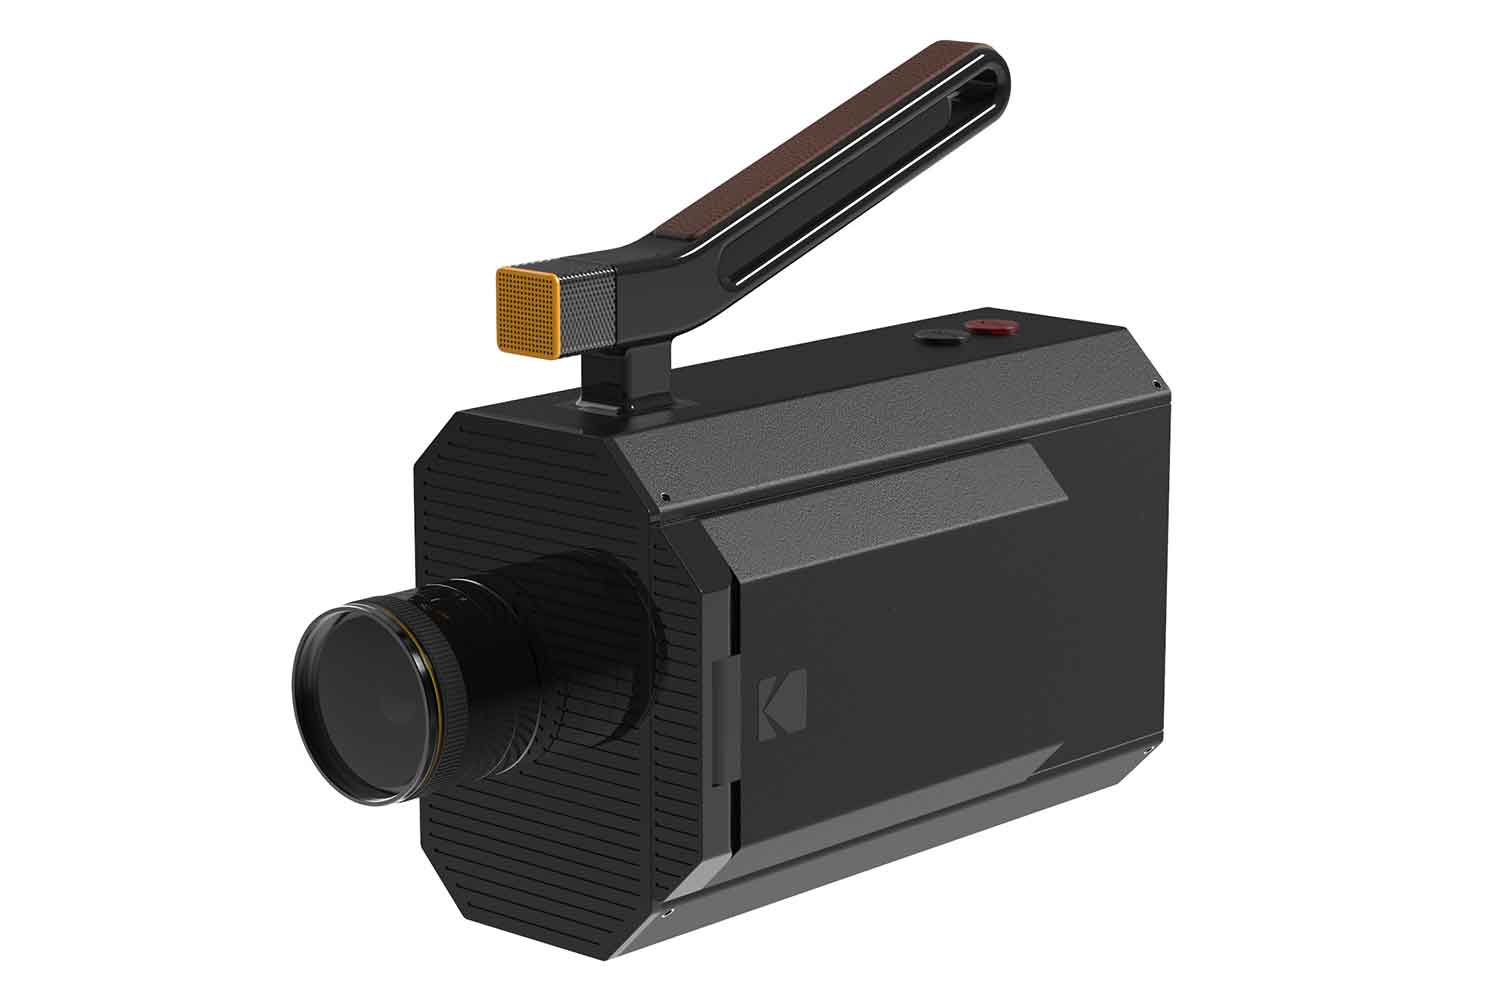 kodaks new super 8mm film camera merges past with future kodak 8 28